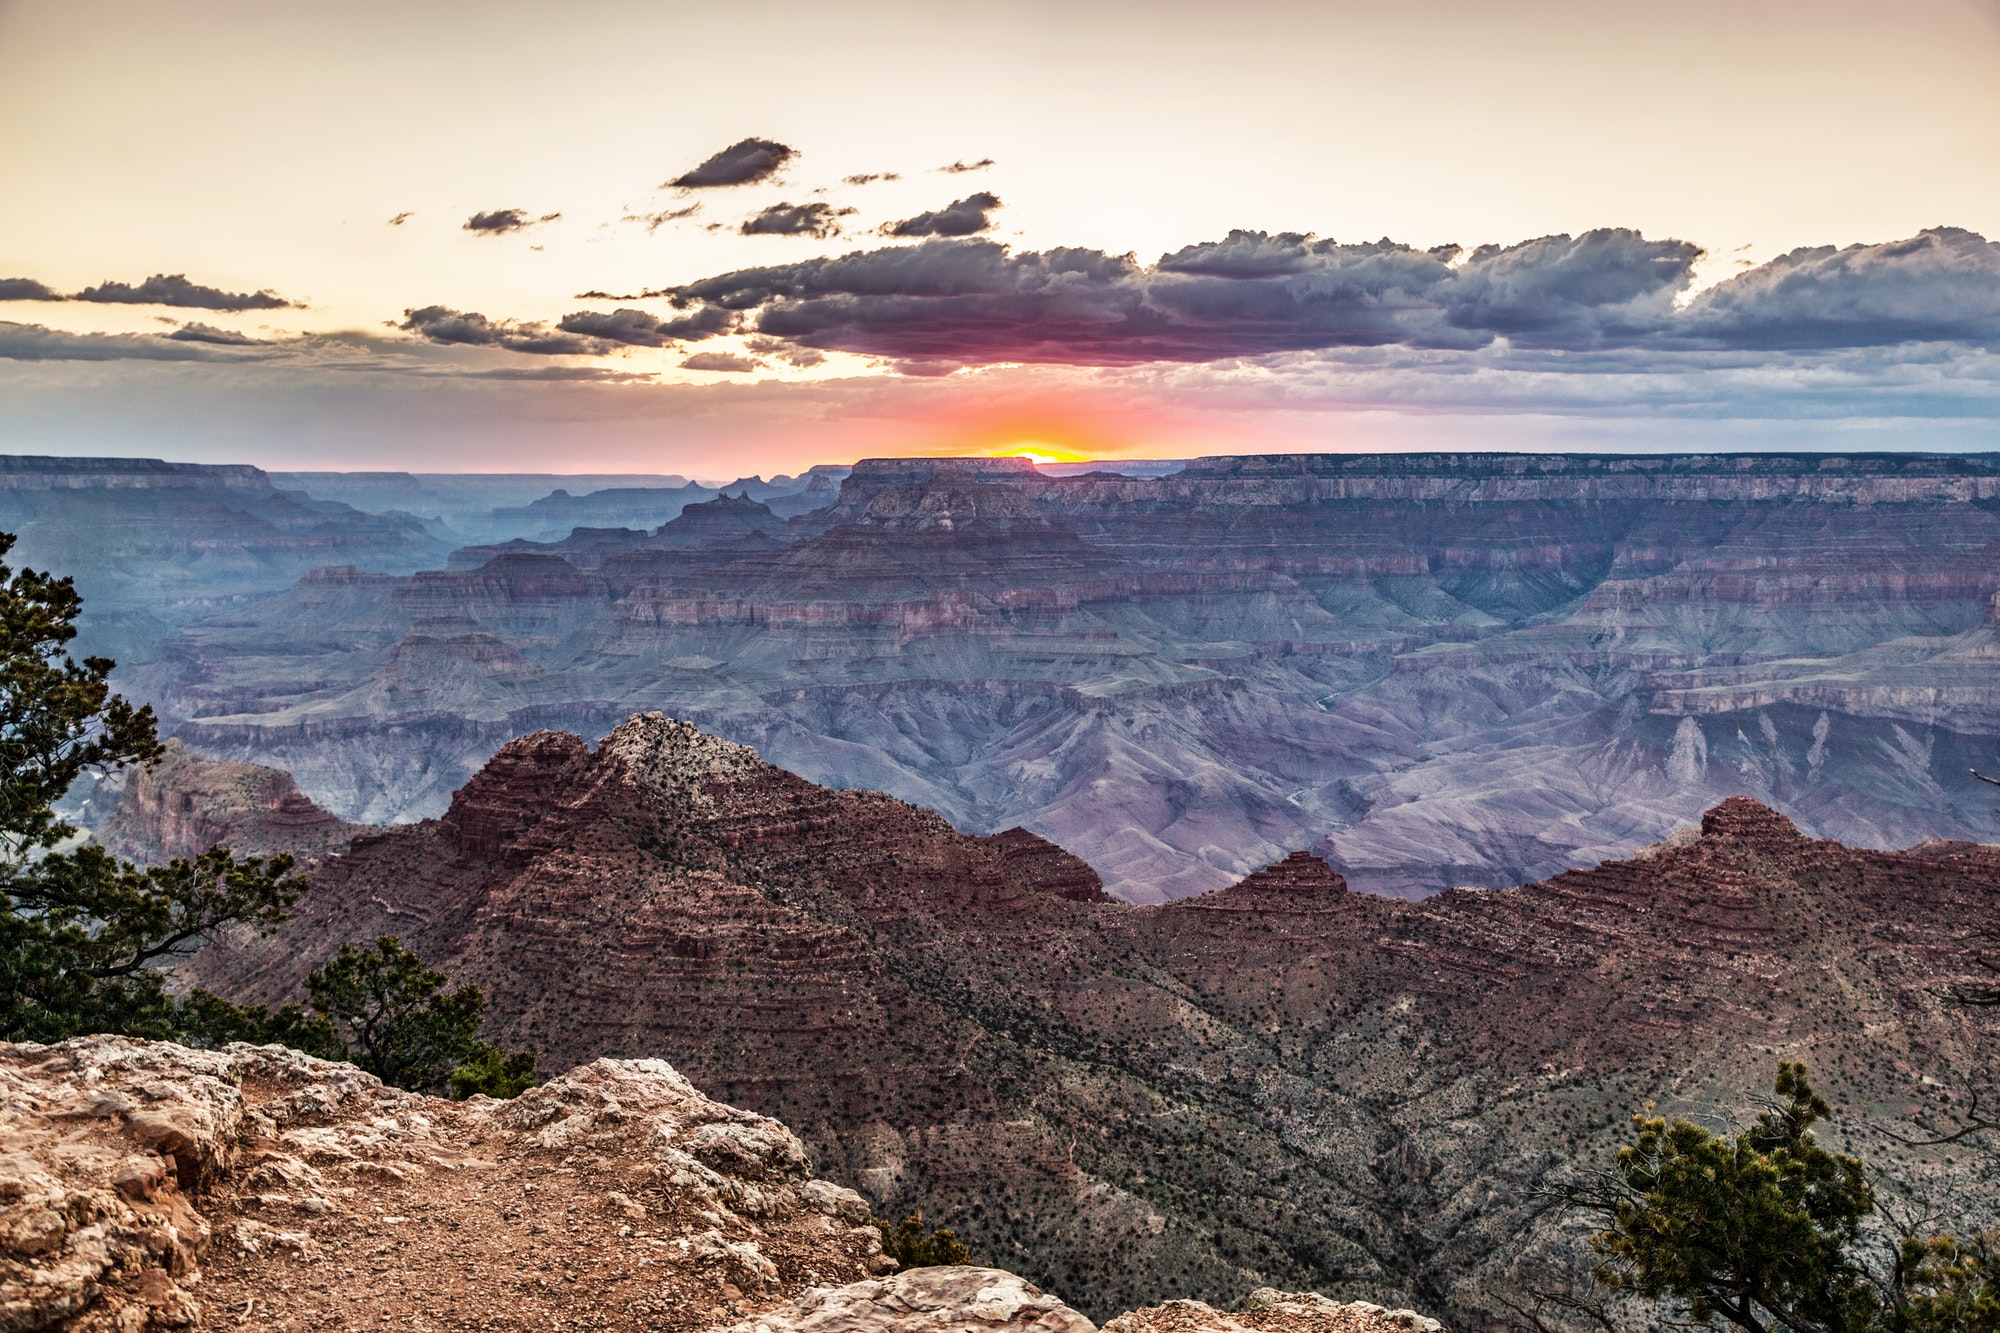 The Grand Canyon in Arizona, USA at sunset.